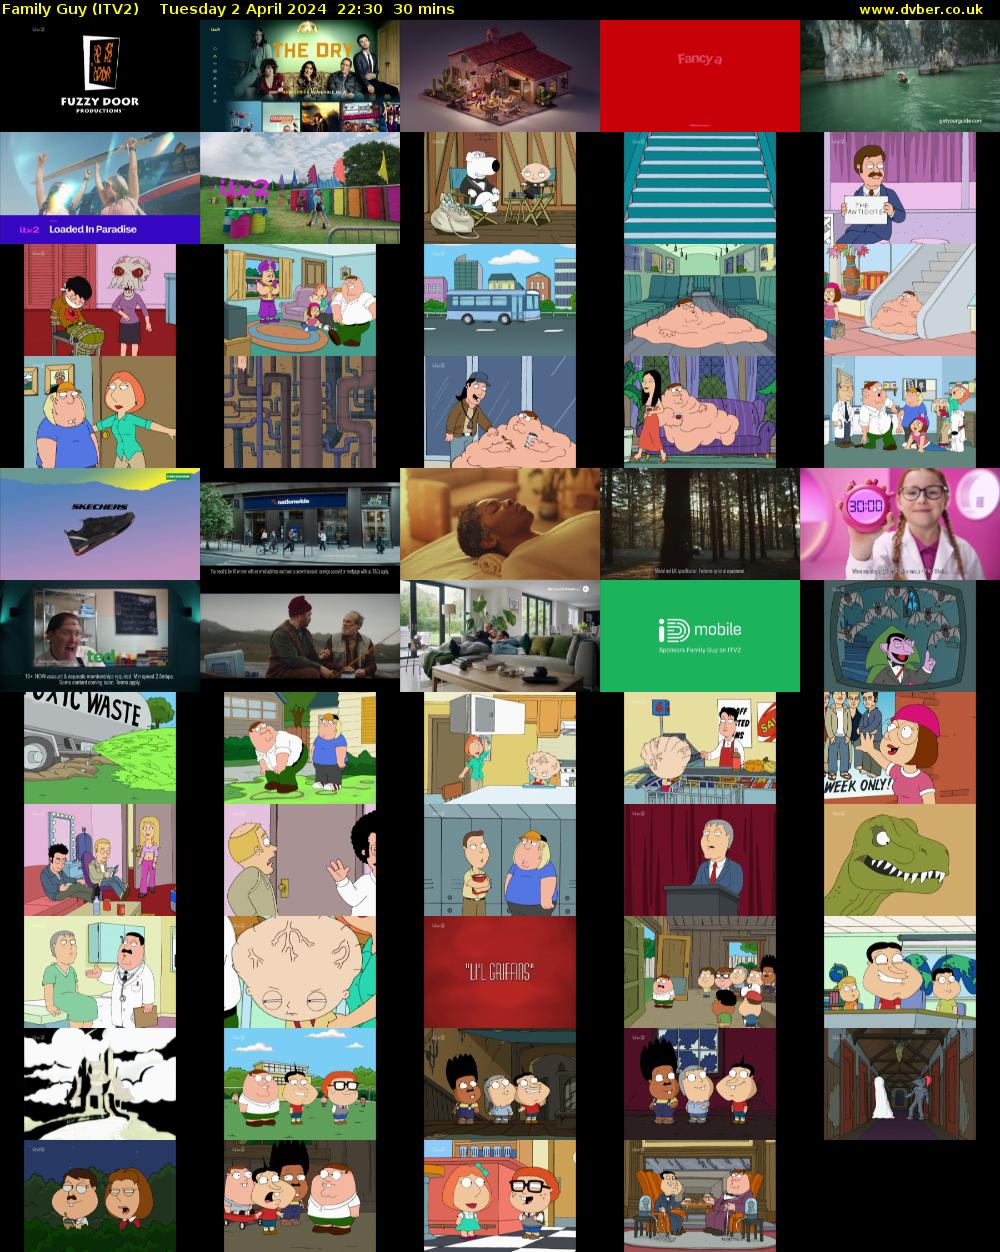 Family Guy (ITV2) Tuesday 2 April 2024 22:30 - 23:00